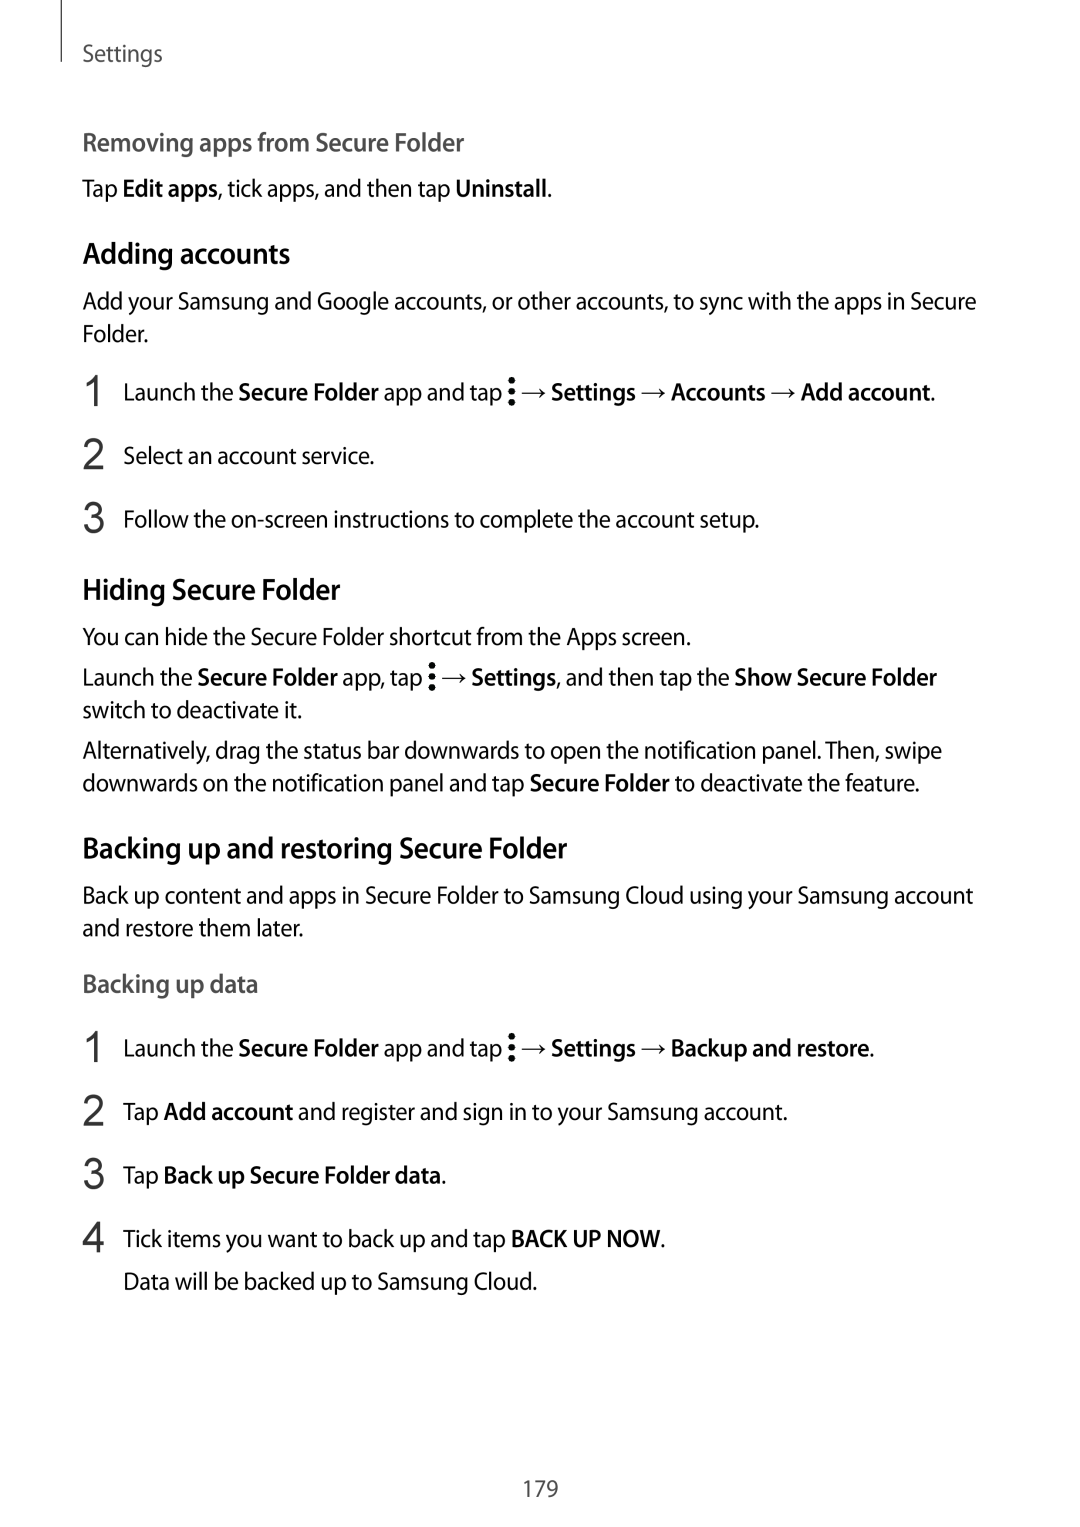 Samsung SM-A530FZKEILO Adding accounts, Hiding Secure Folder, Backing up and restoring Secure Folder, Backing up data 